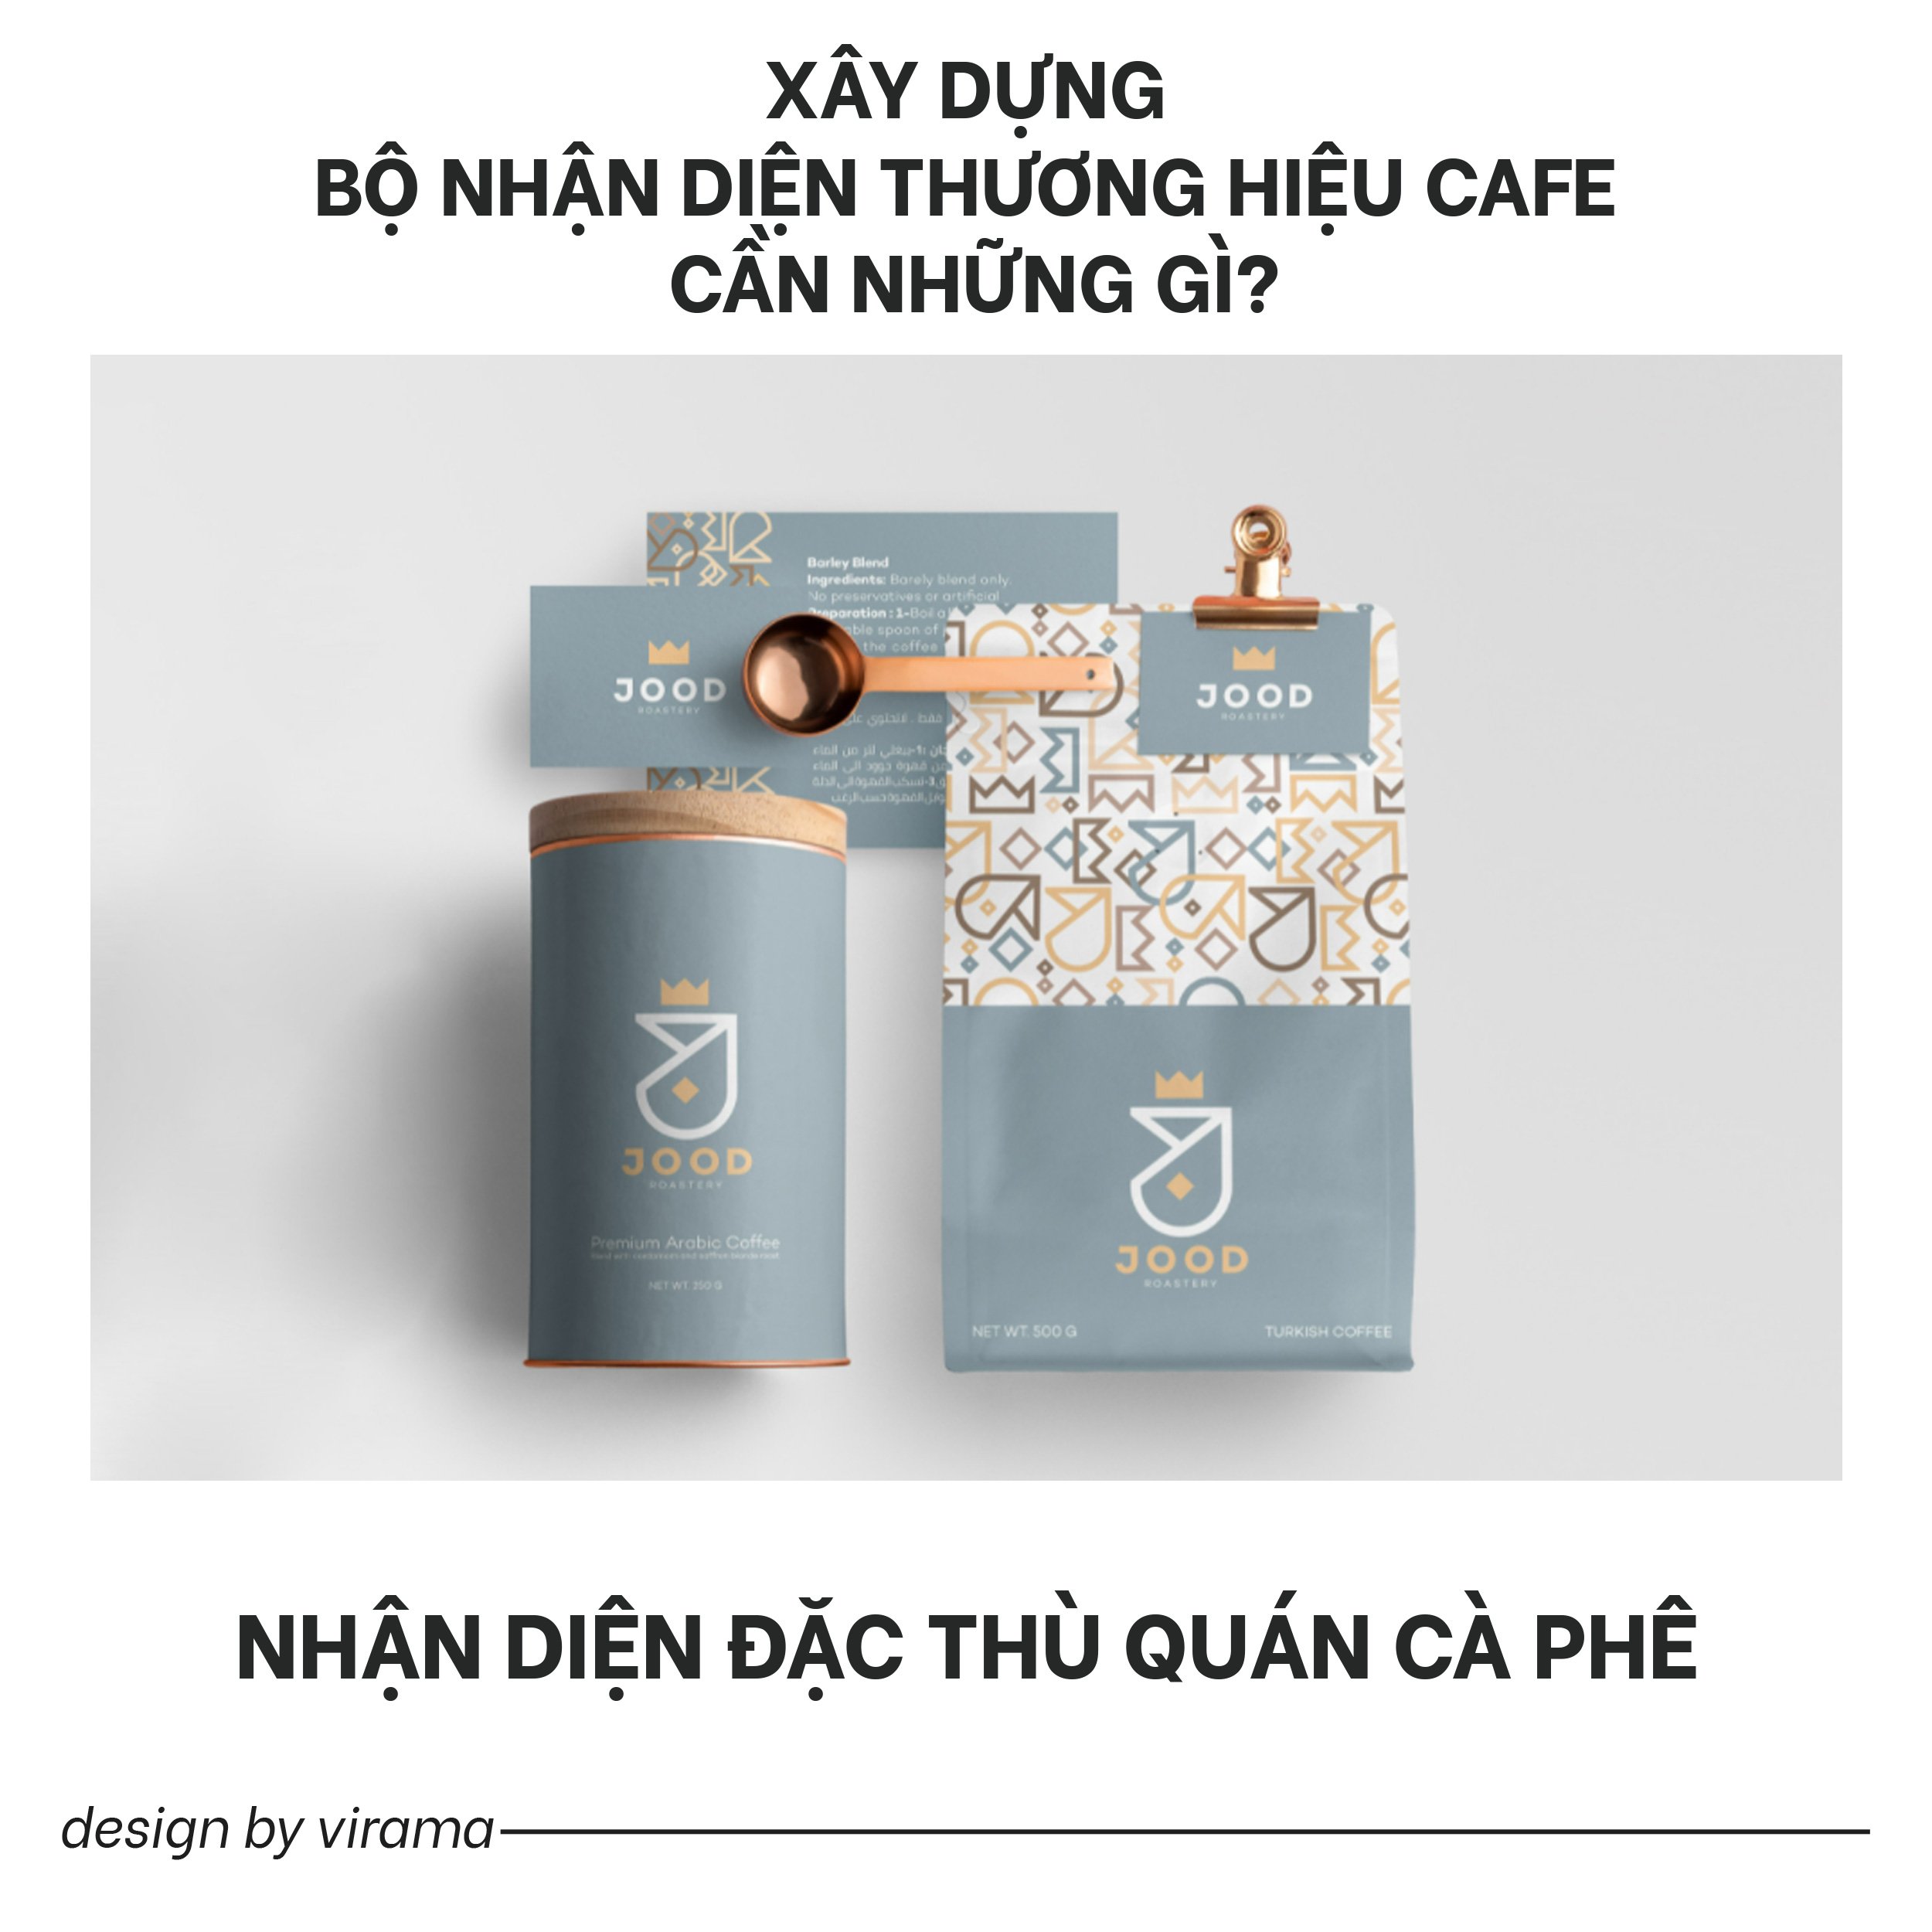 bo-nhan-dien-thuong-hieu-cafe-7